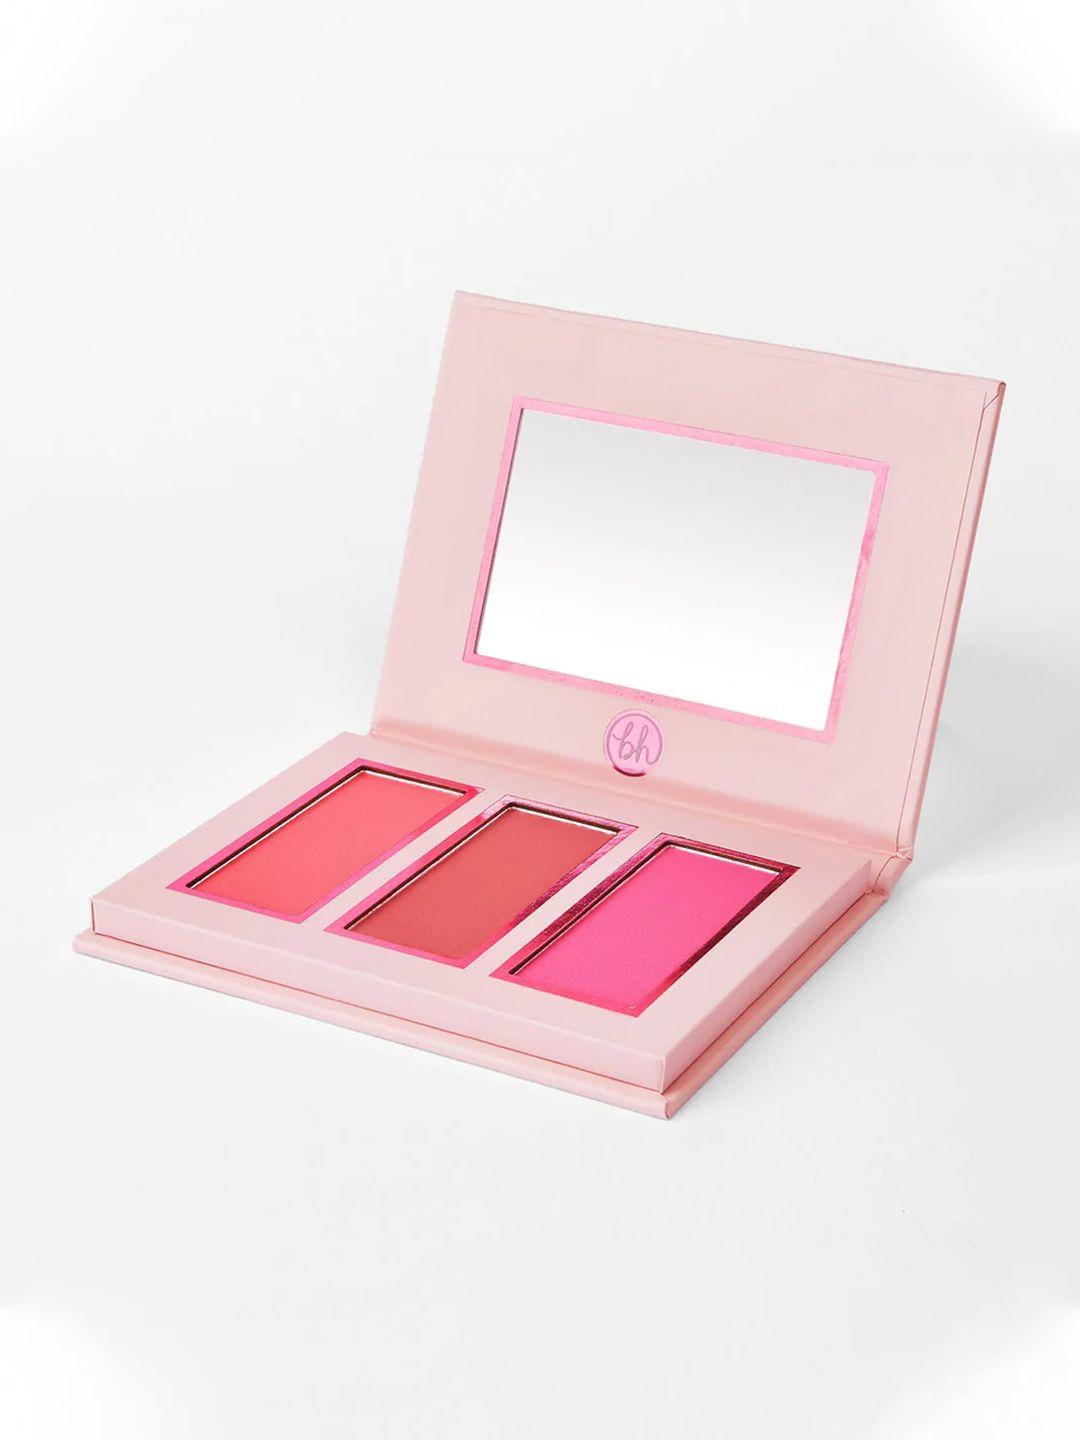 bh cosmetics mrs. bella 3-color high-pigmented blush trio 11g - rosy